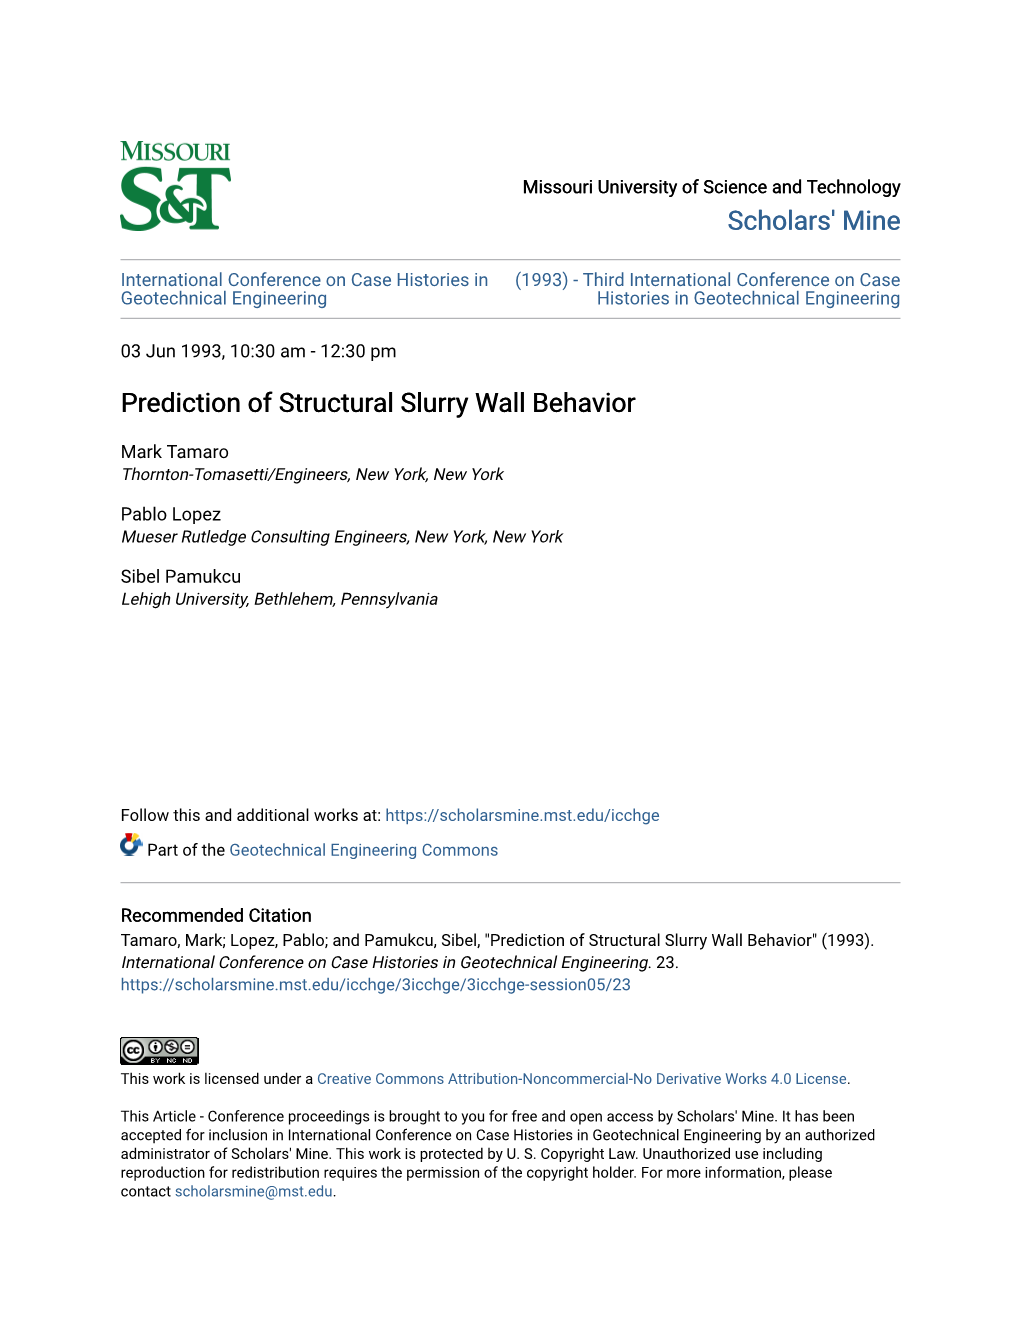 Prediction of Structural Slurry Wall Behavior